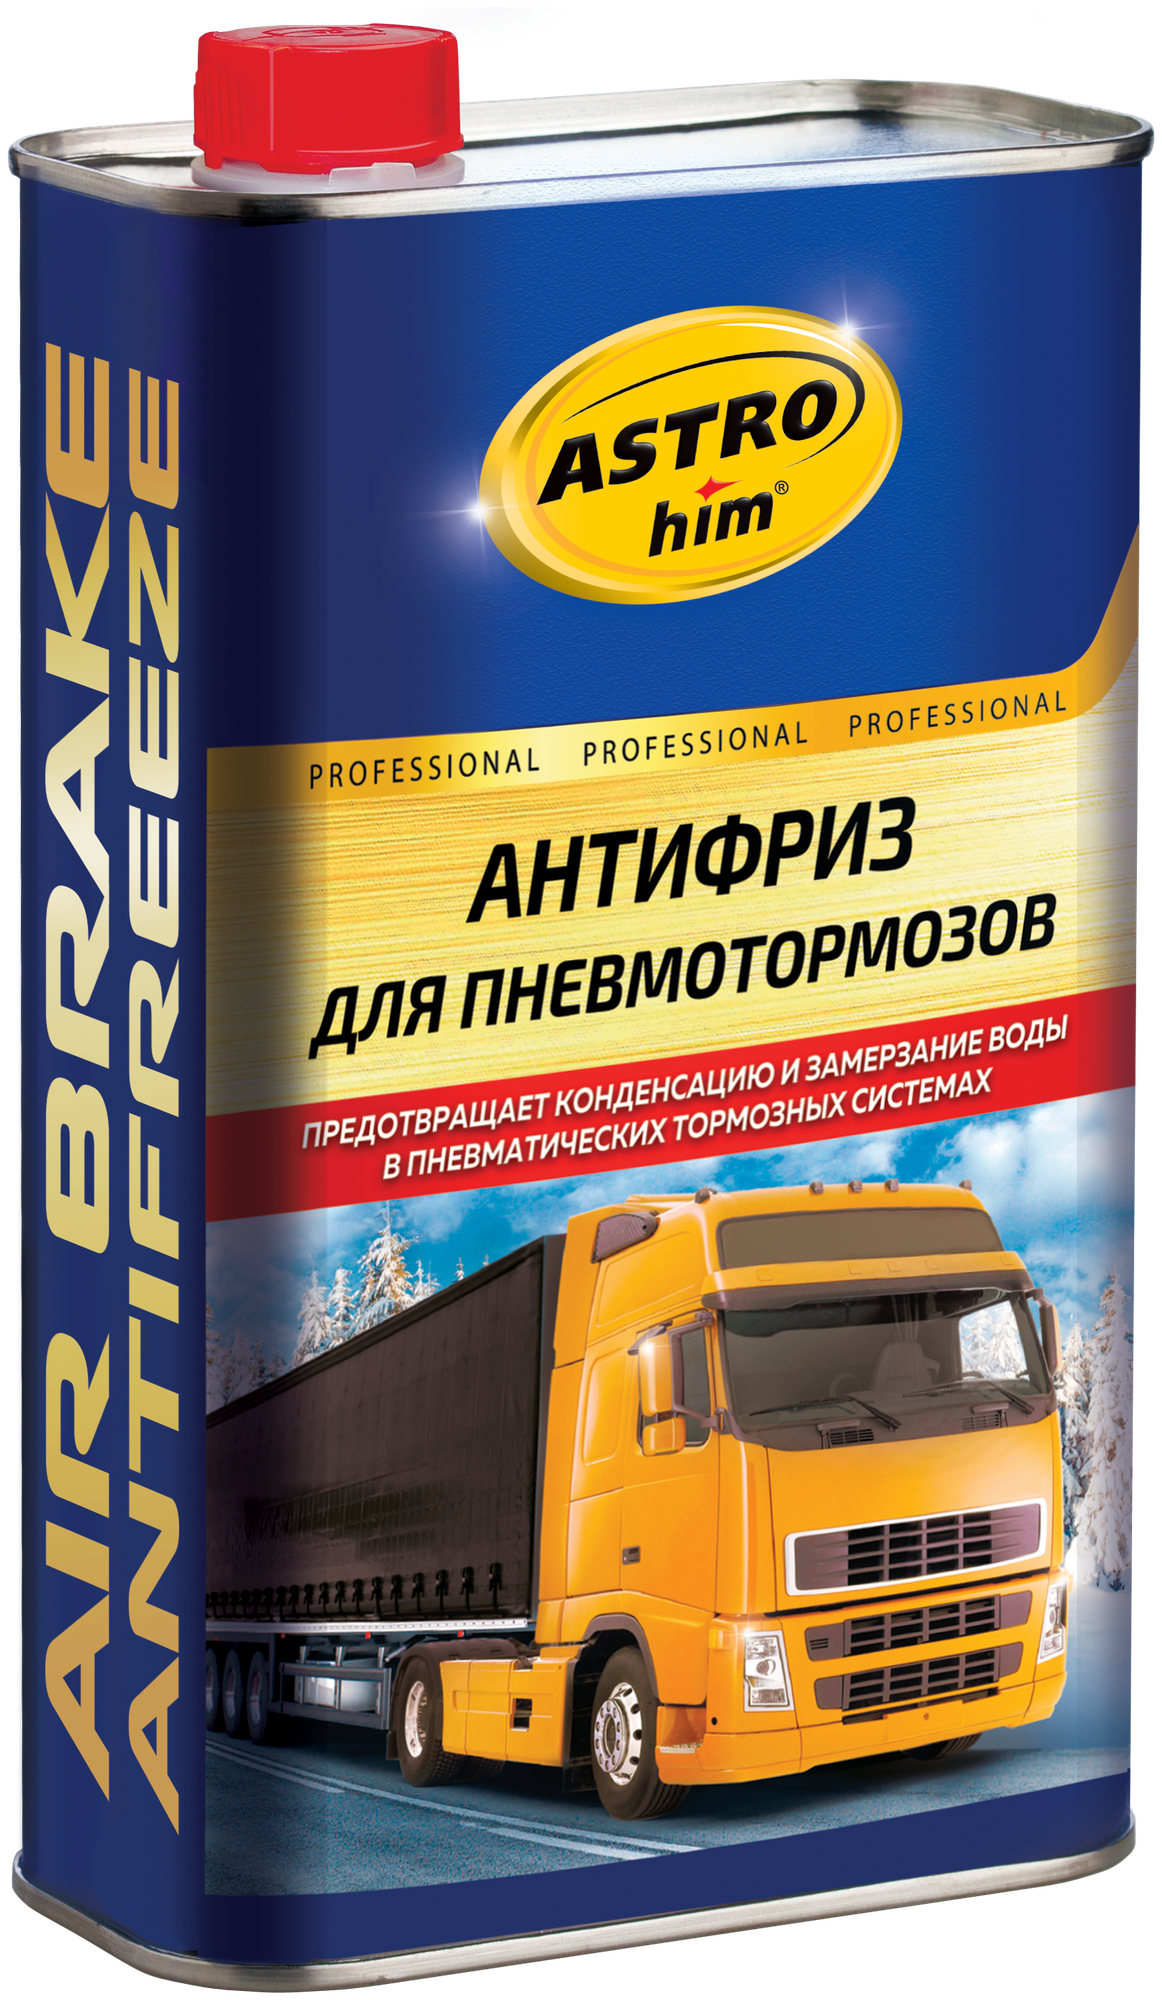 ASTROhim Антифриз для пневмотормозов Ас-900 жестяная канистра, 1000 мл 46930 .